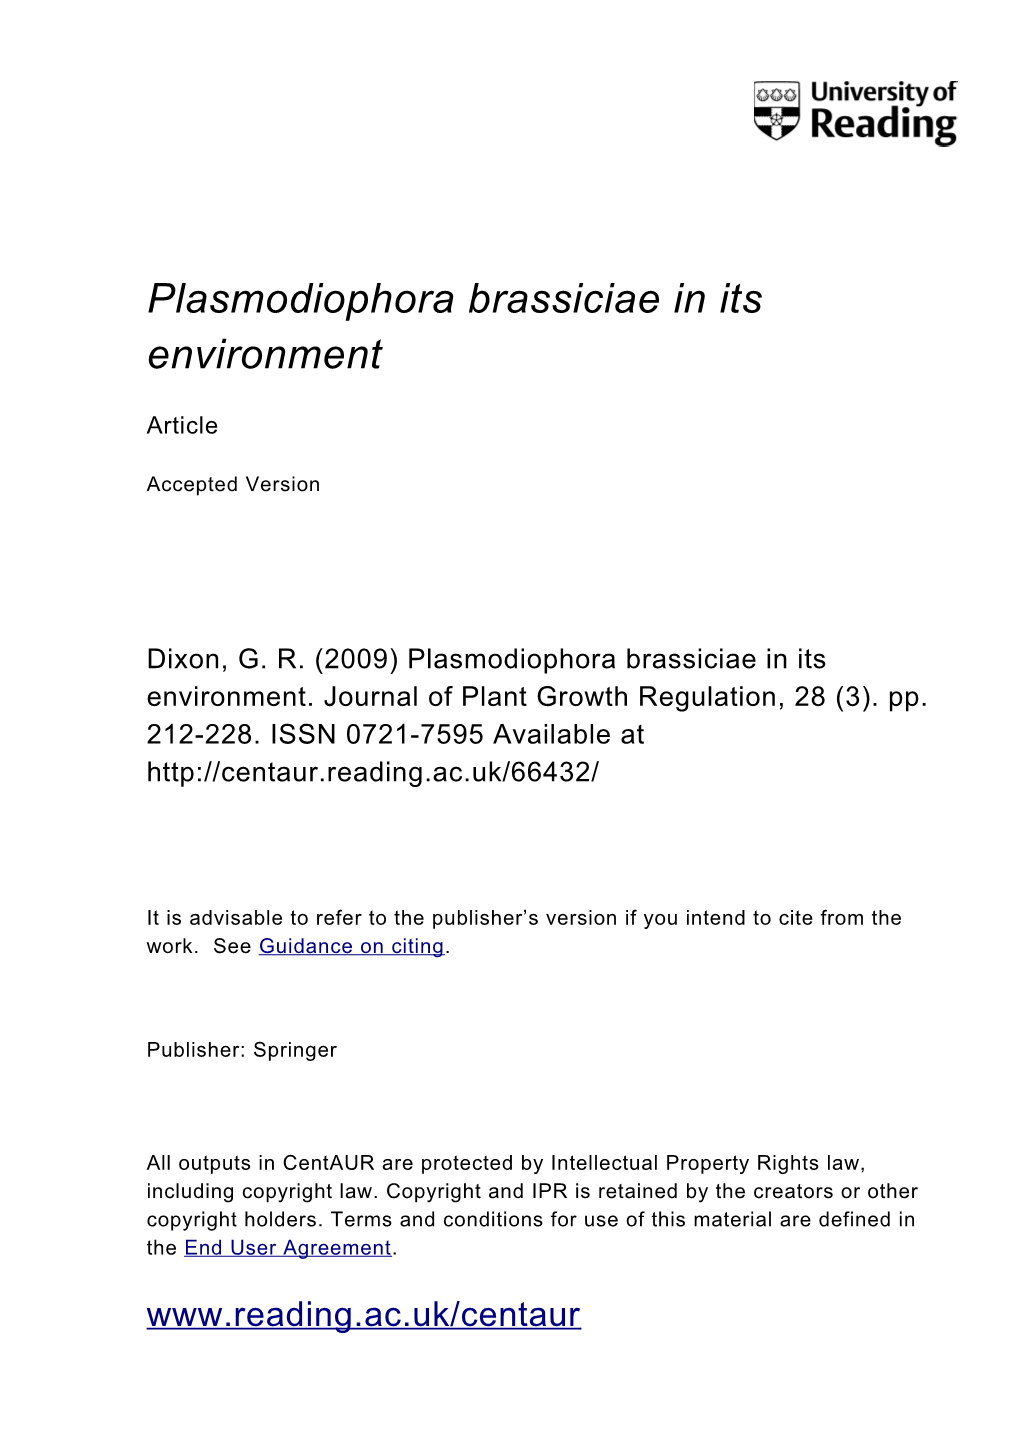 Plasmodiophora Brassiciae in Its Environment